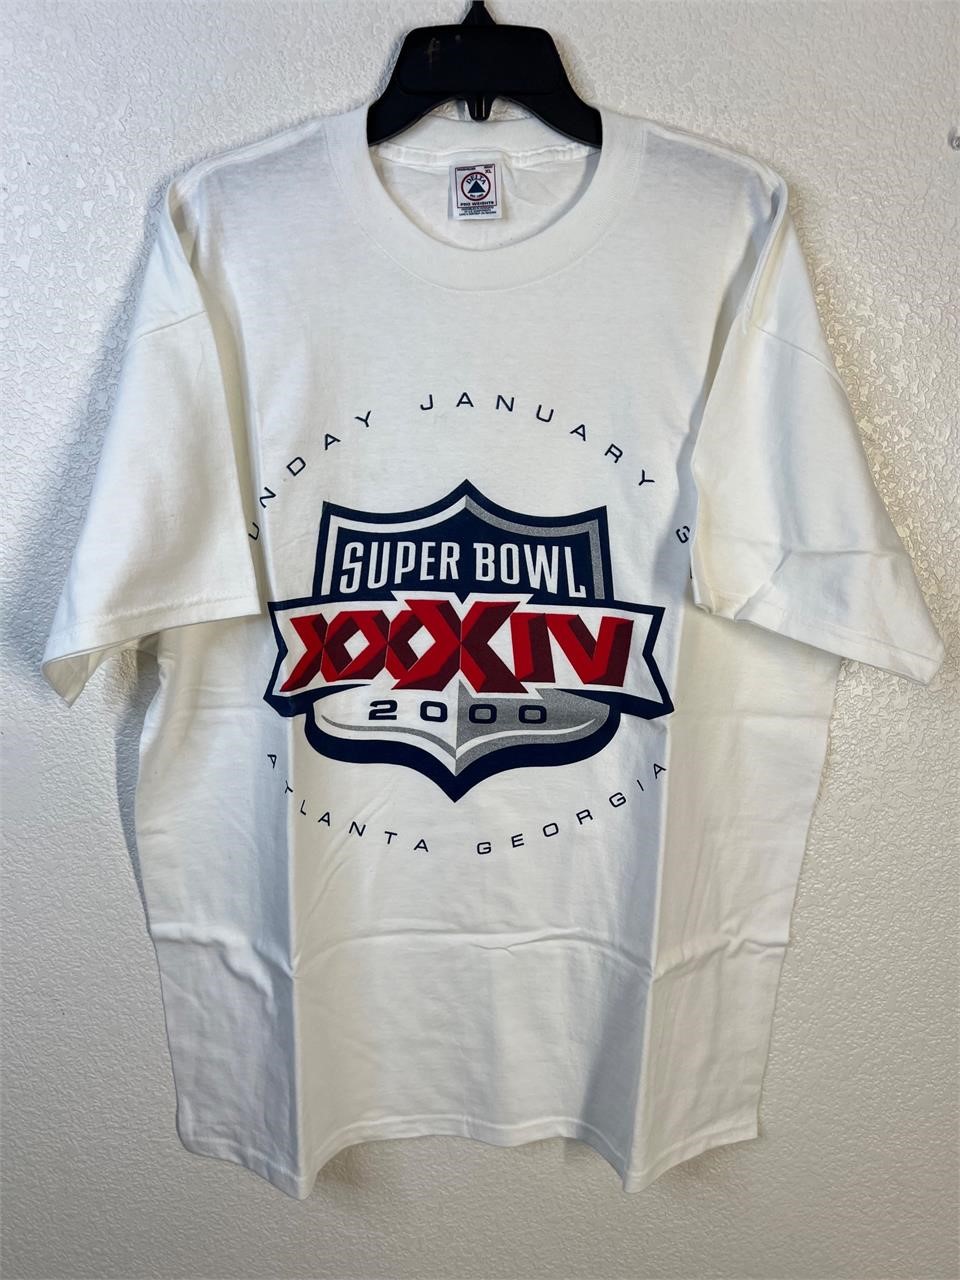 Vintage Super Bowl XXXIV 2000 Shirt